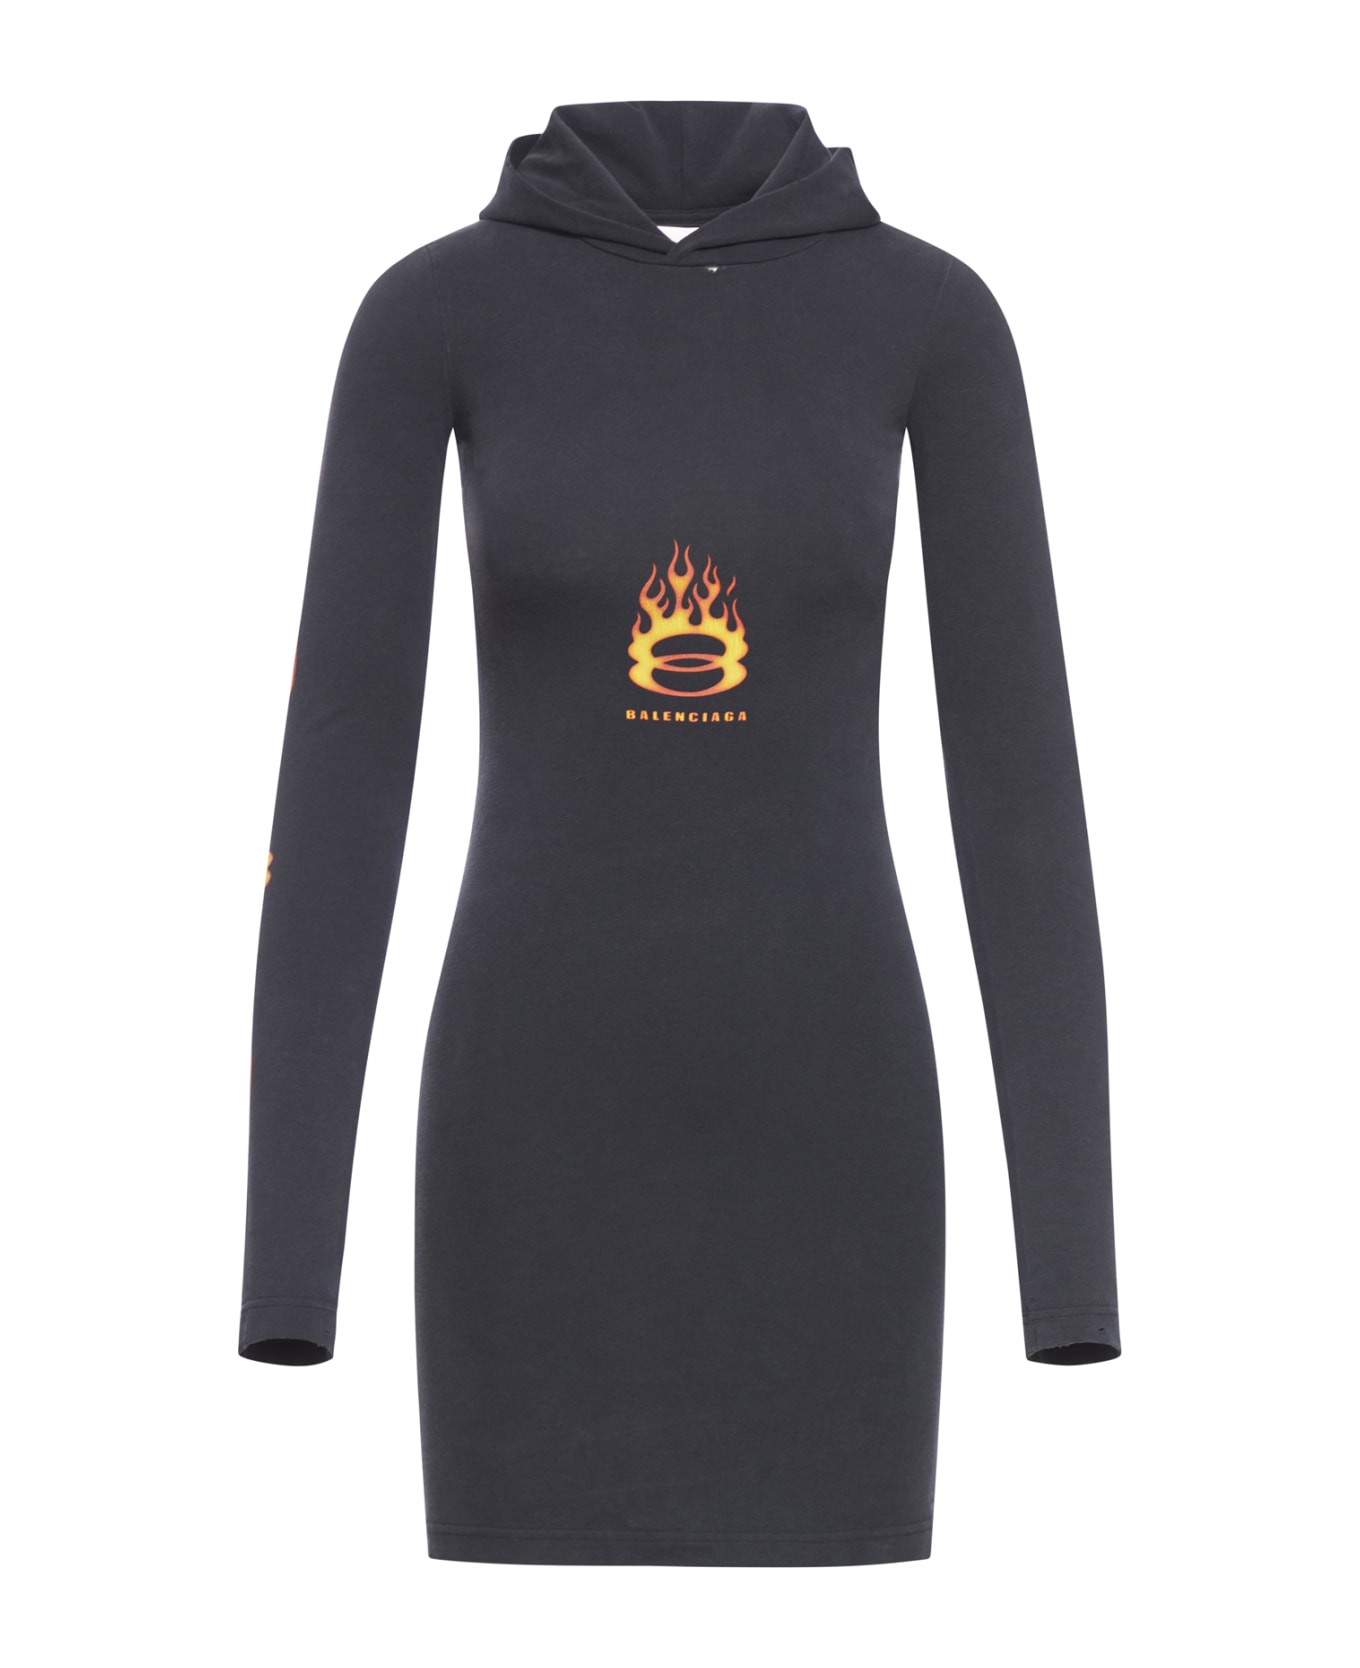 Balenciaga Hooded Dress Burning Unity Stretch Plg Jrsy - Washed Out Black ワンピース＆ドレス